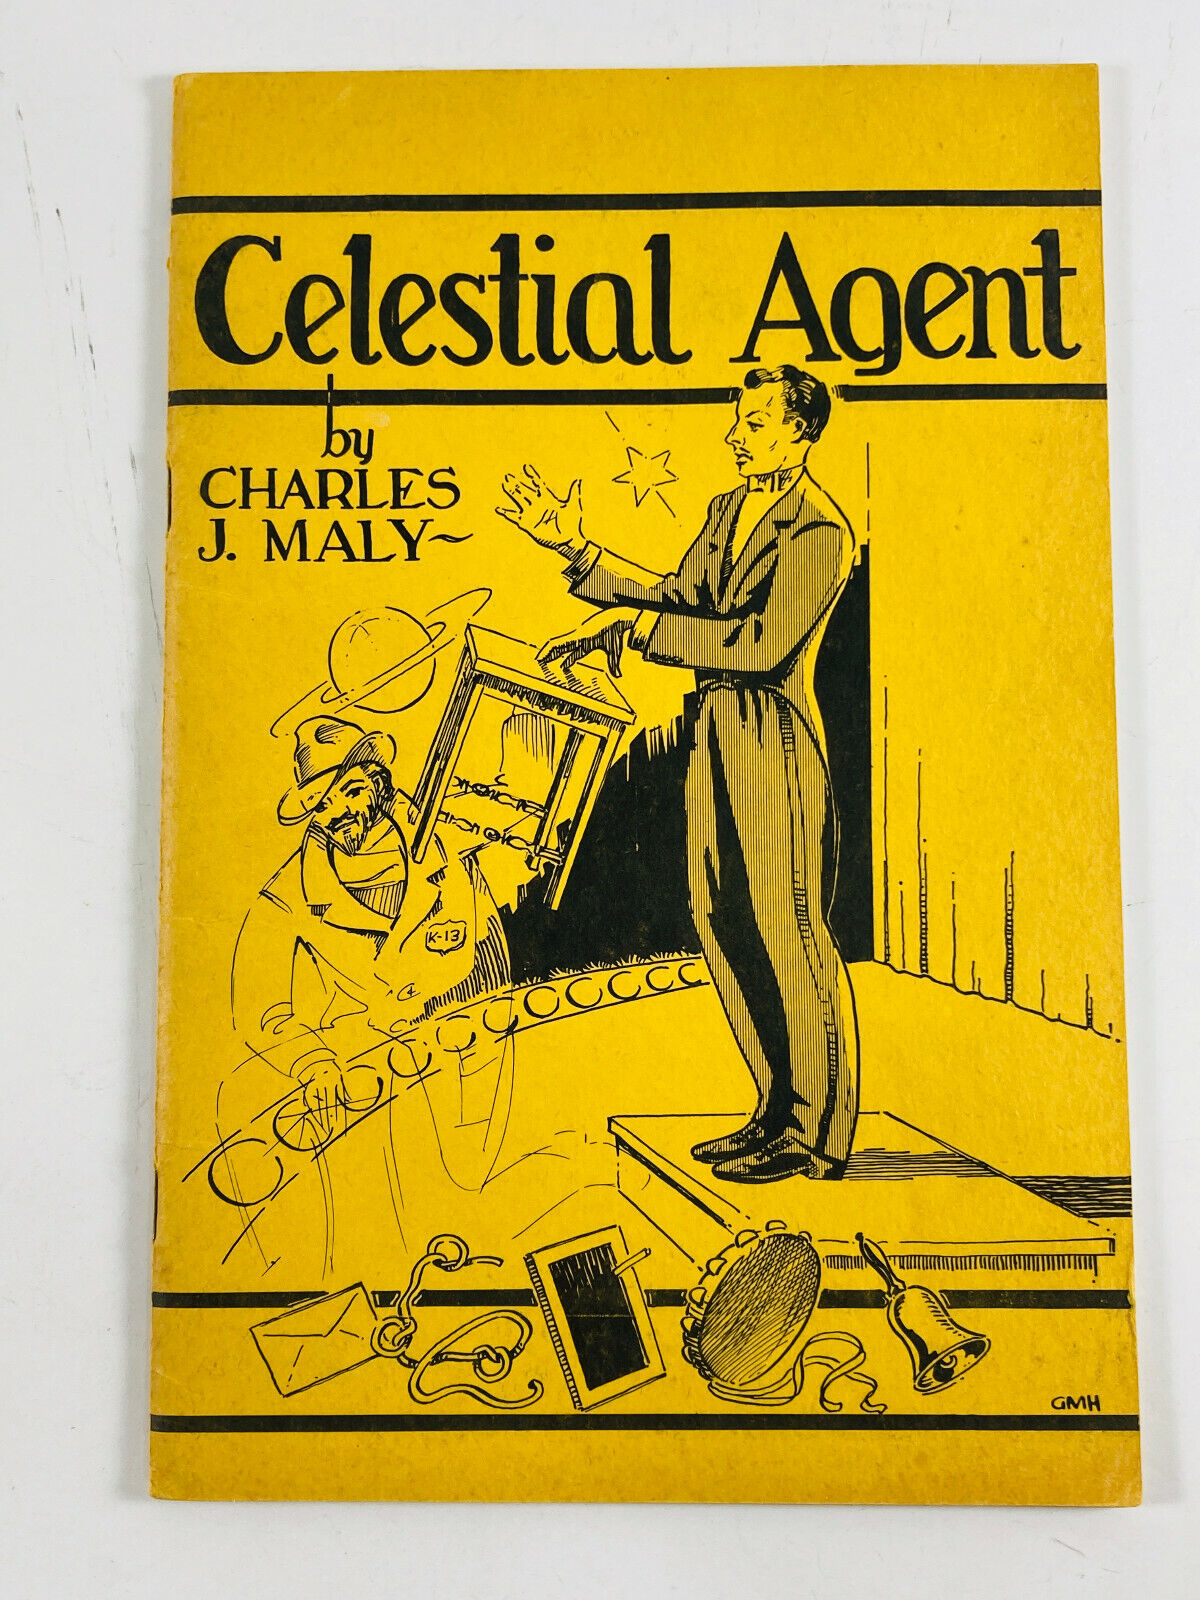 Vintage 1944 Magic Book CELESTIAL AGENT by Charles J. Maley Howatt